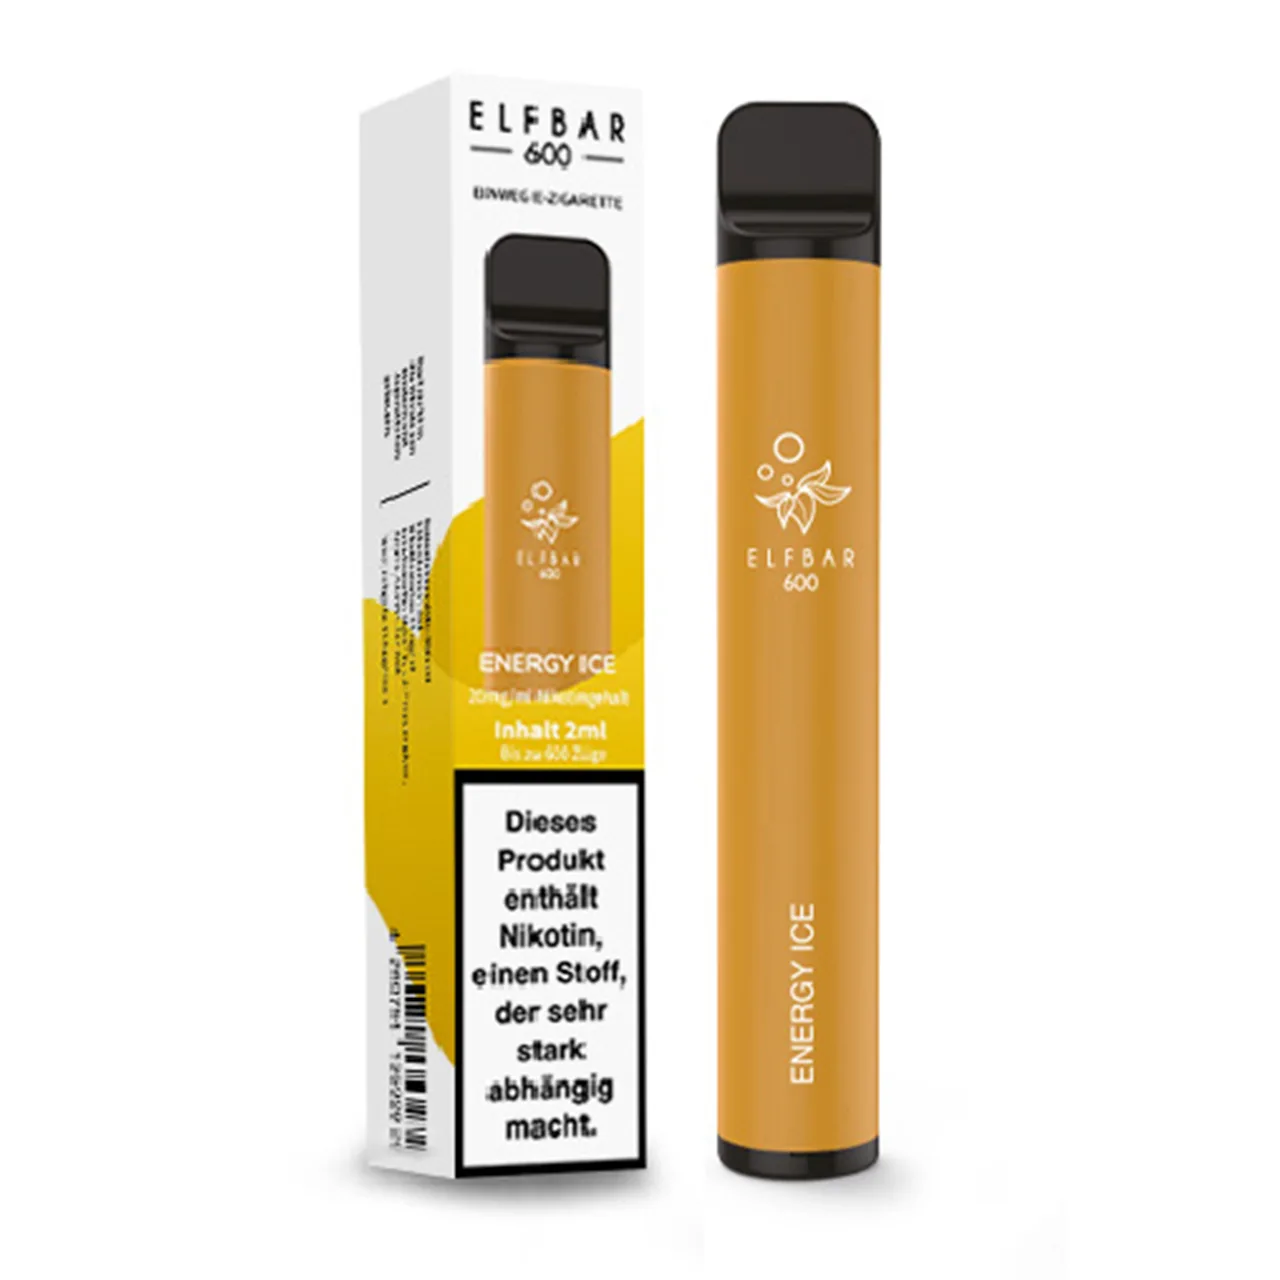 Elf Bar 600 Energy Ice Einweg E-Zigarette Verpackung